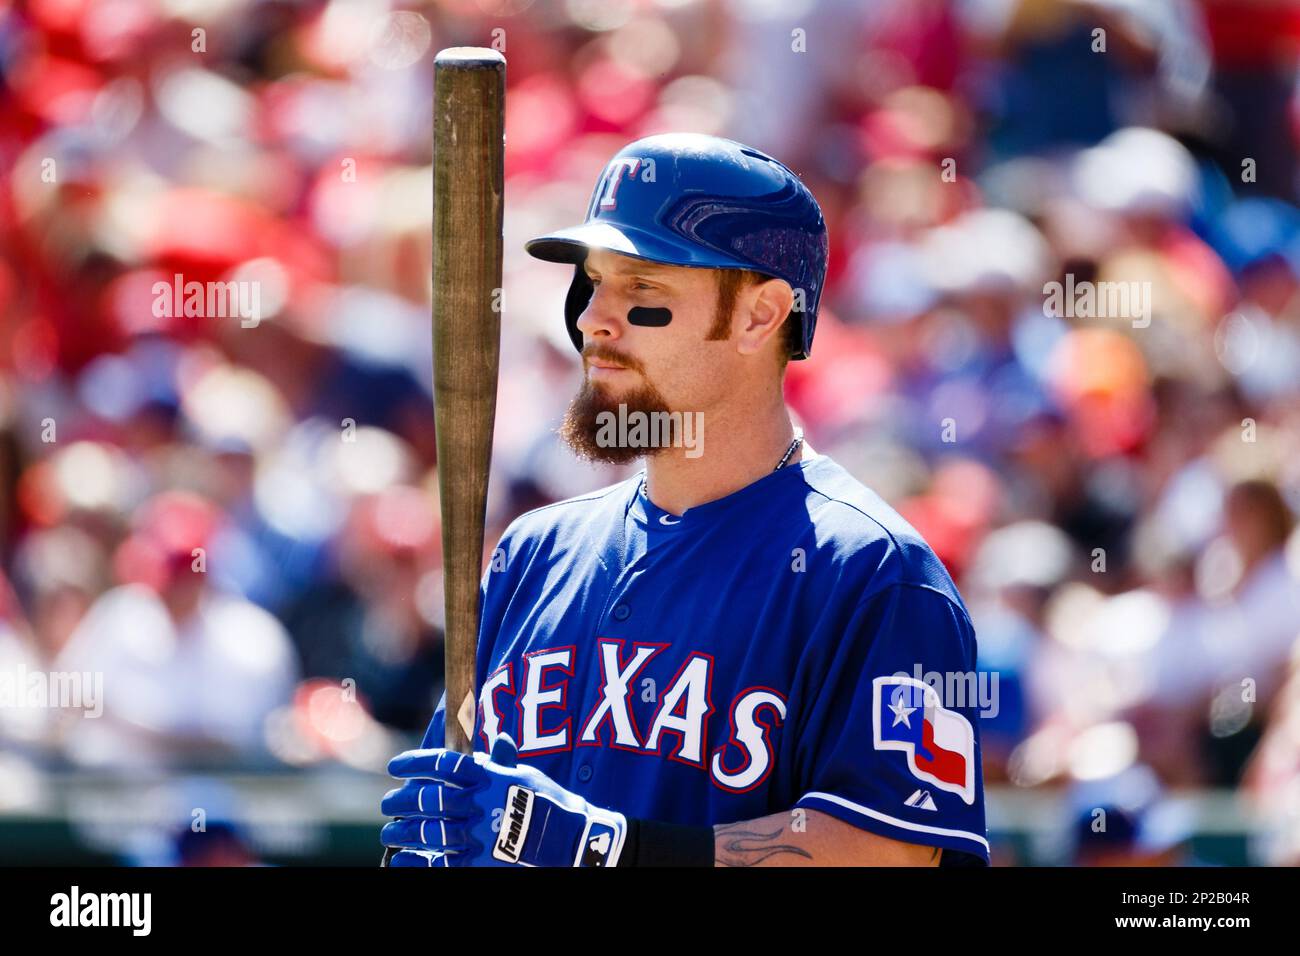 04 OCT 2015: Texas Rangers Outfield Josh Hamilton (32) [2432